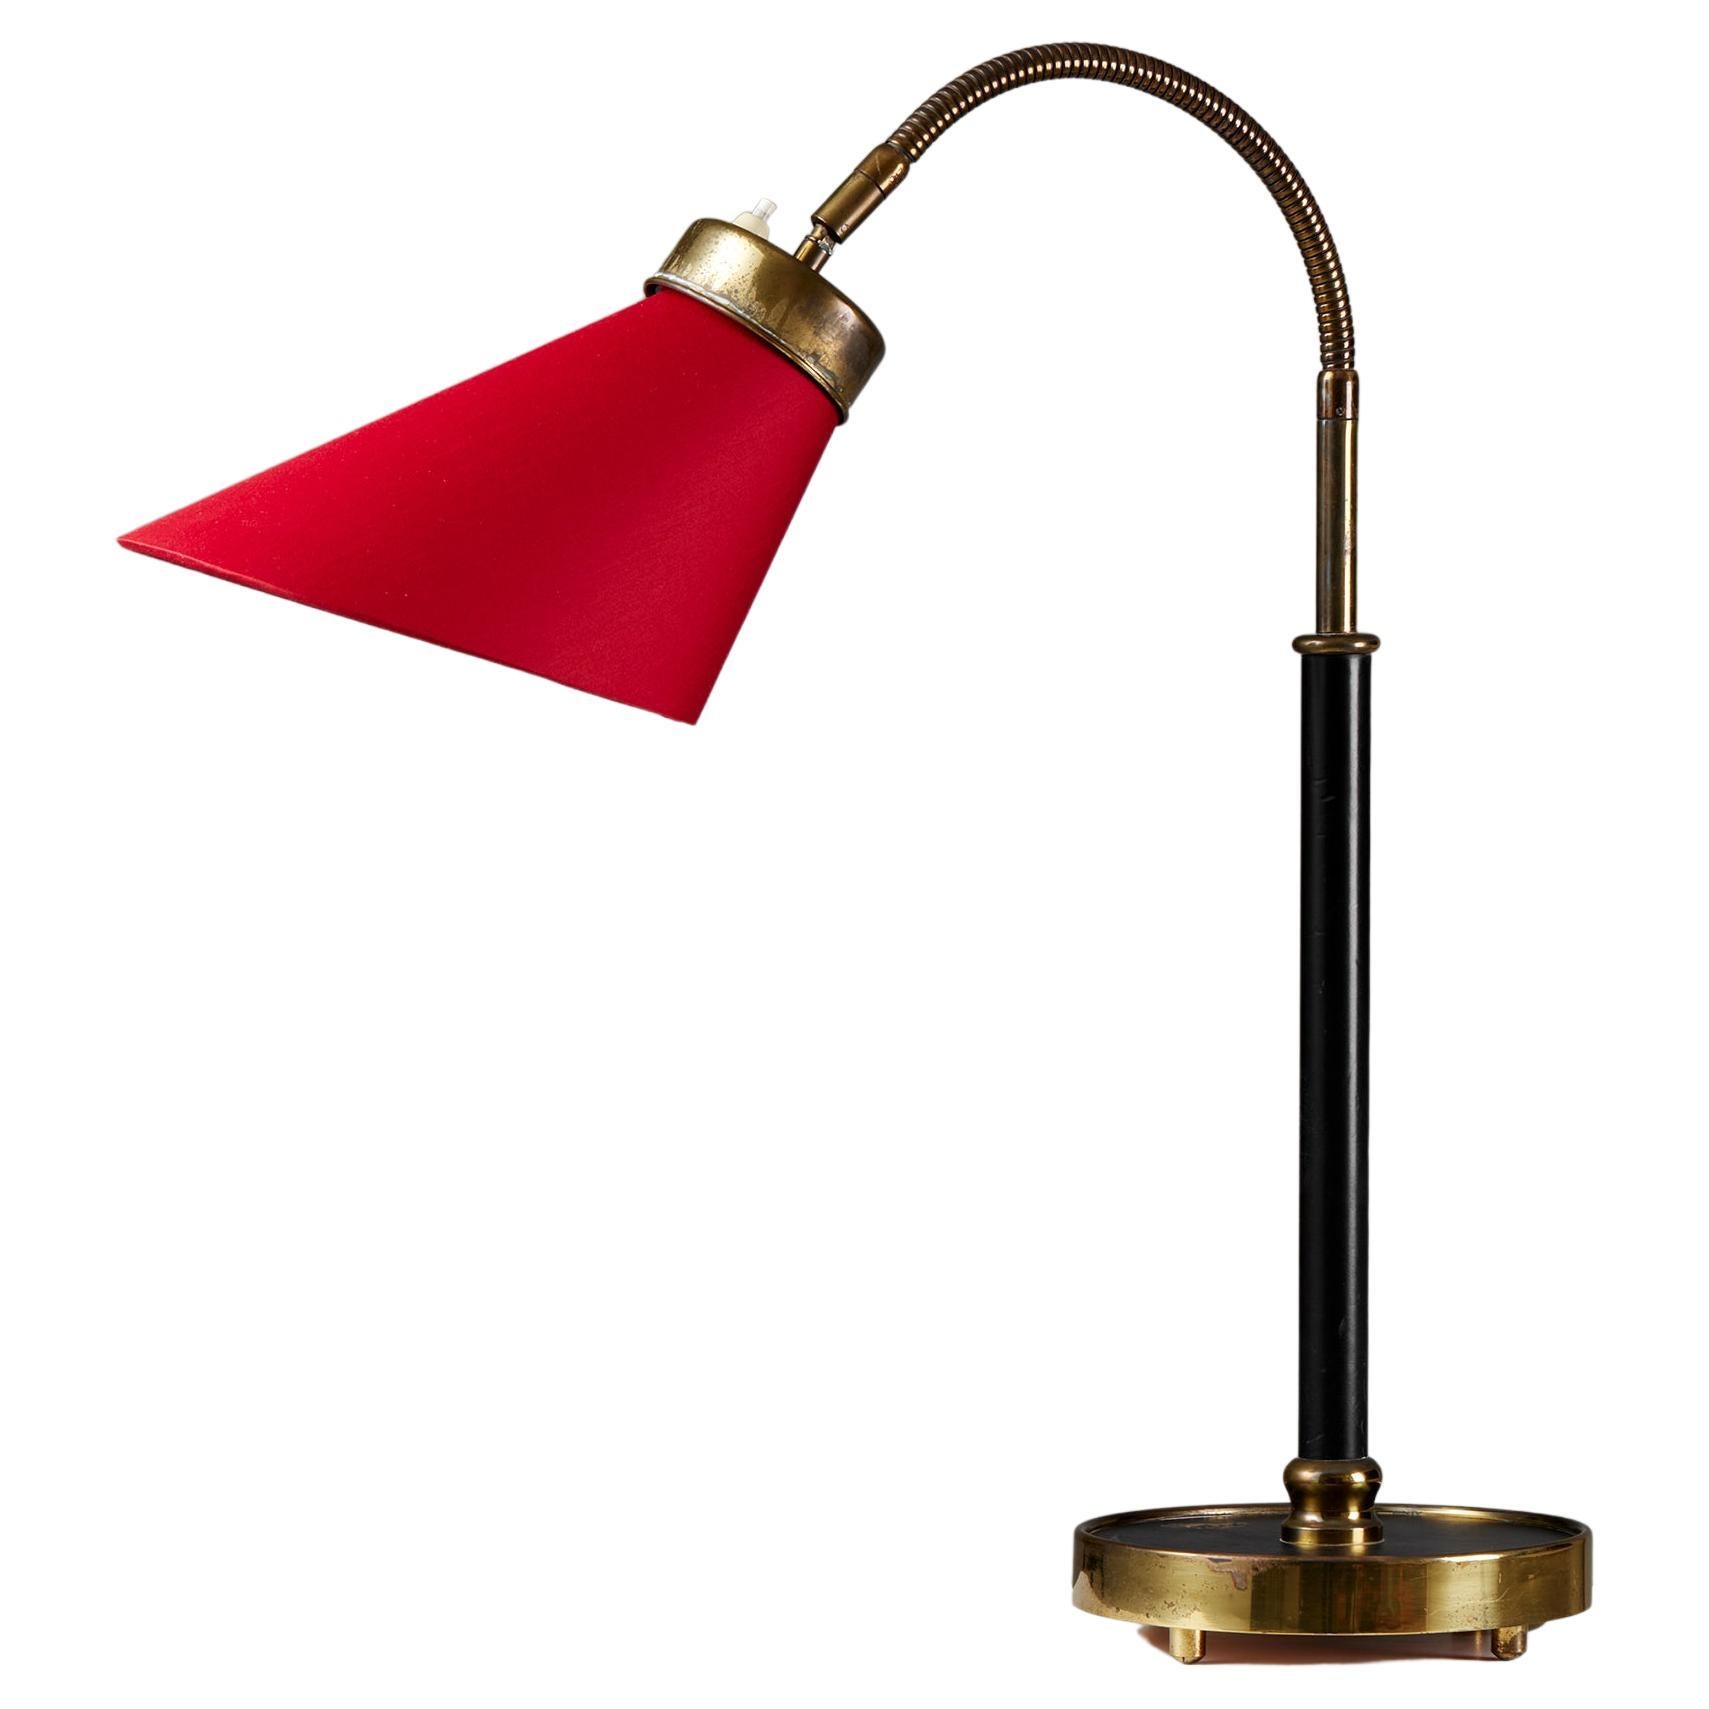 Table lamp model 2434 designed by Josef Frank for Svenskt Tenn, Sweden, 1939 Red